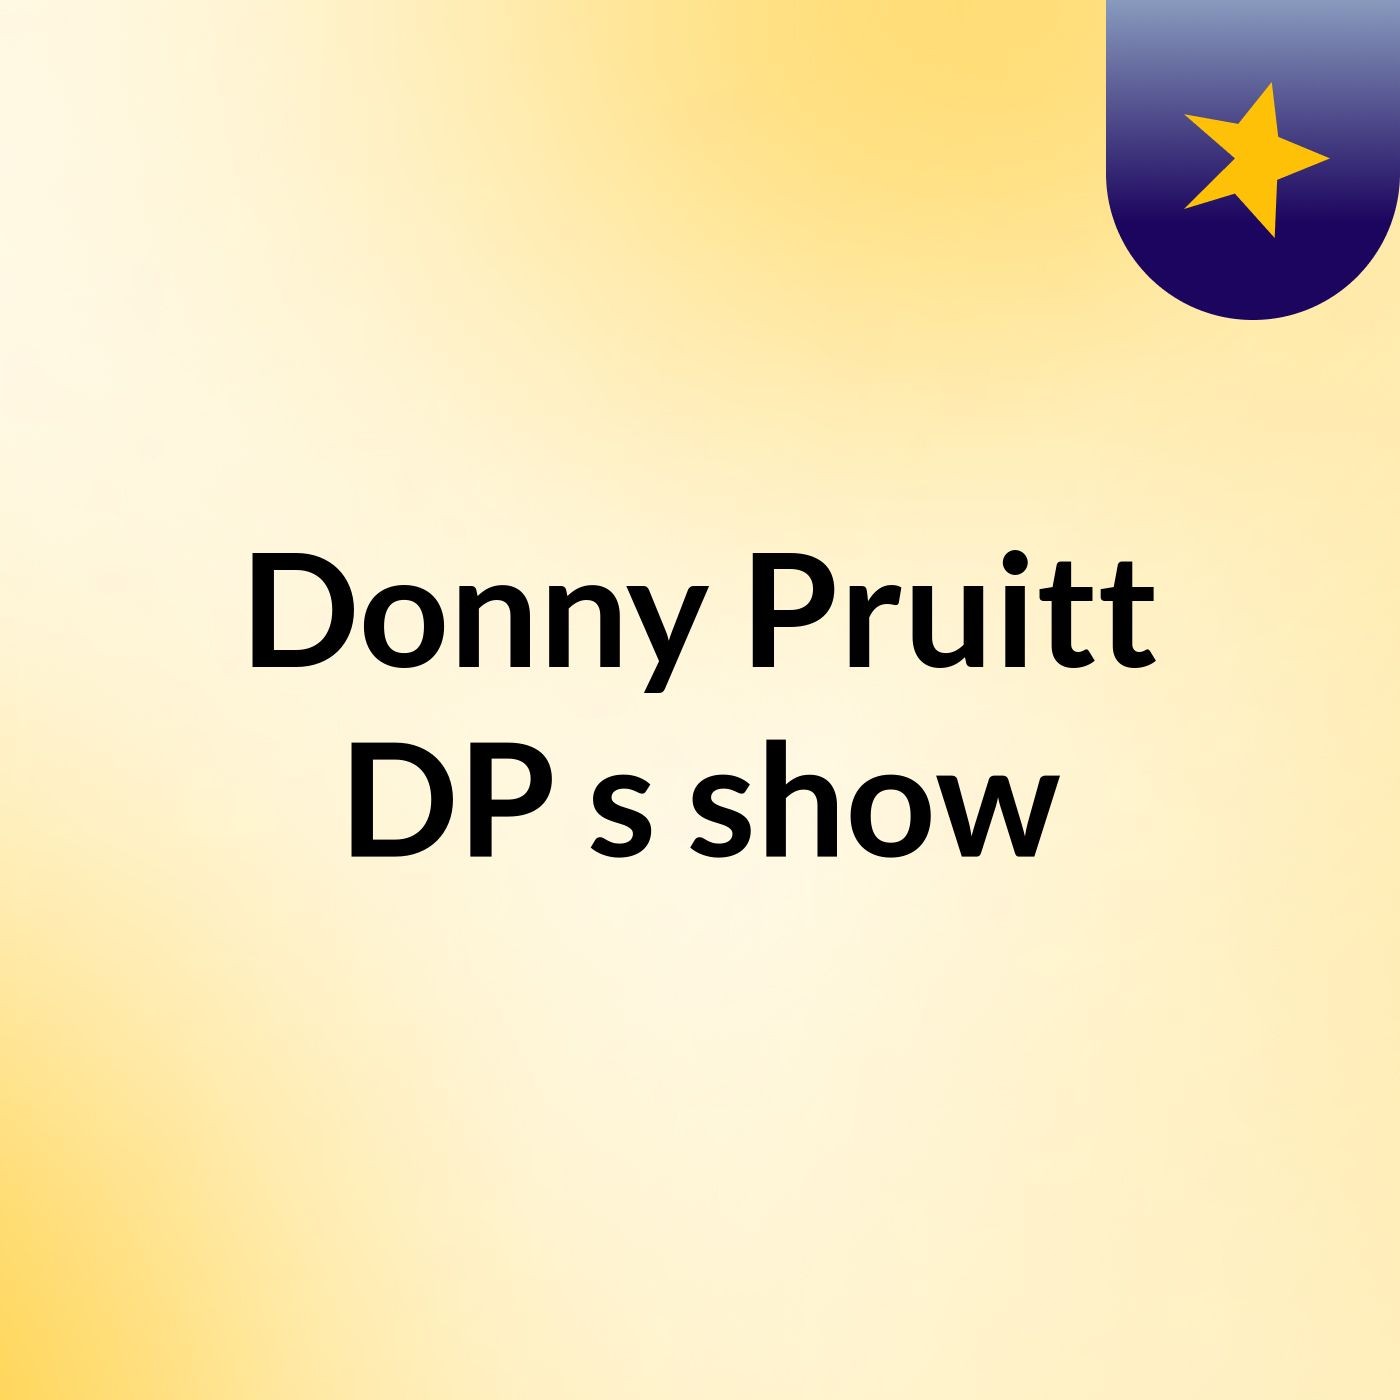 Donny Pruitt DP's show